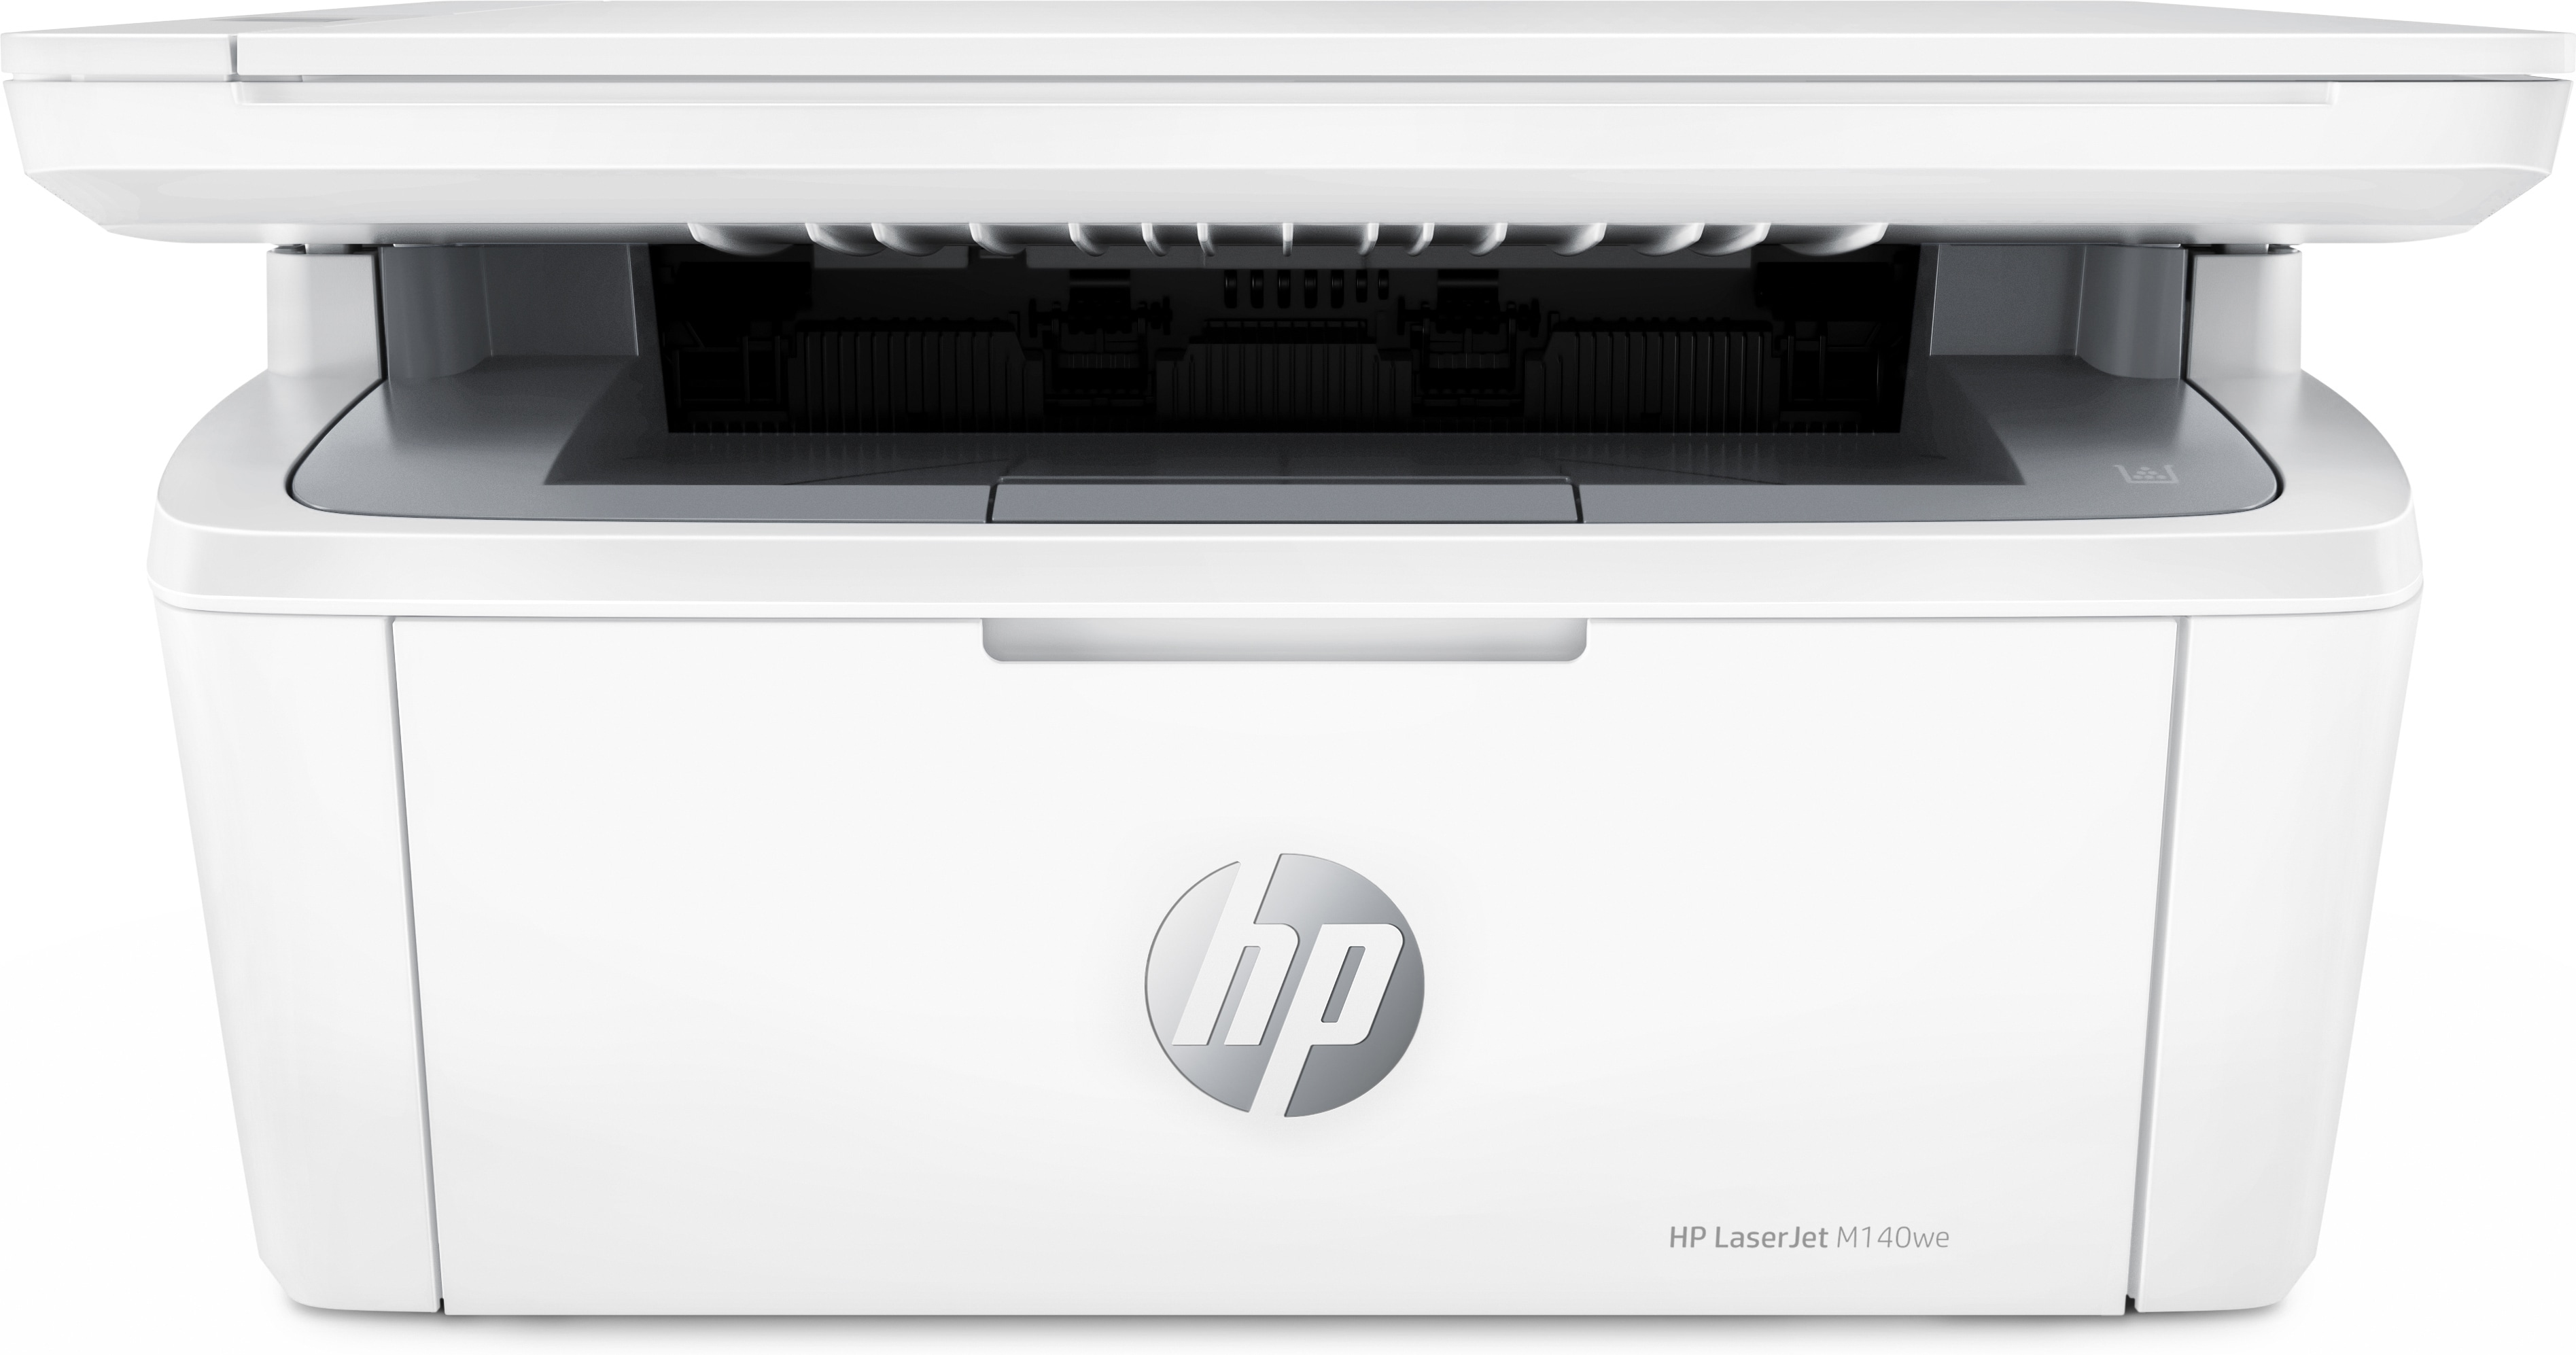 Image of HP LaserJet Stampante multifunzione HP M140we, Bianco e nero, Stampante per Piccoli uffici, Stampa, copia, scansione, wireless; HP+; Idonea a HP Instant Ink; Scansione a e-mail